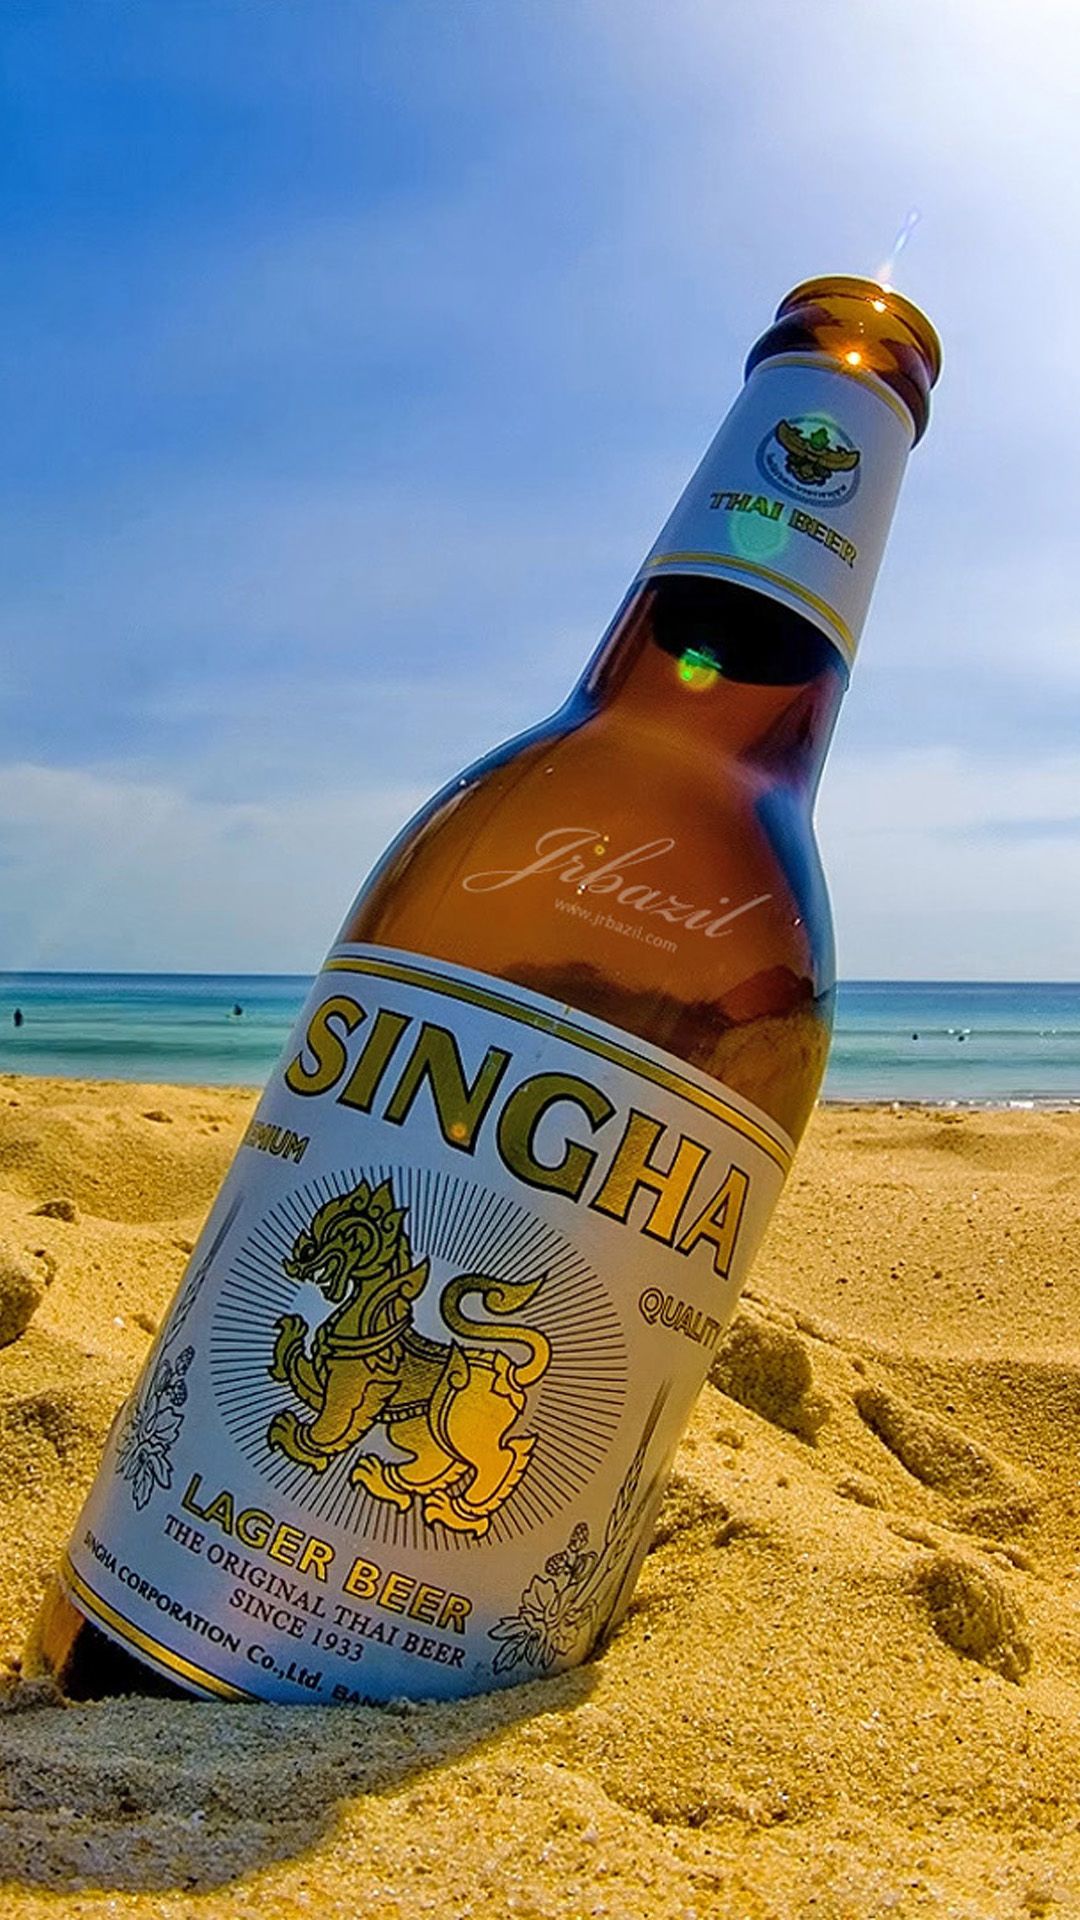 Summer Beach Beer Bottles Singha Android Wallpaper free download